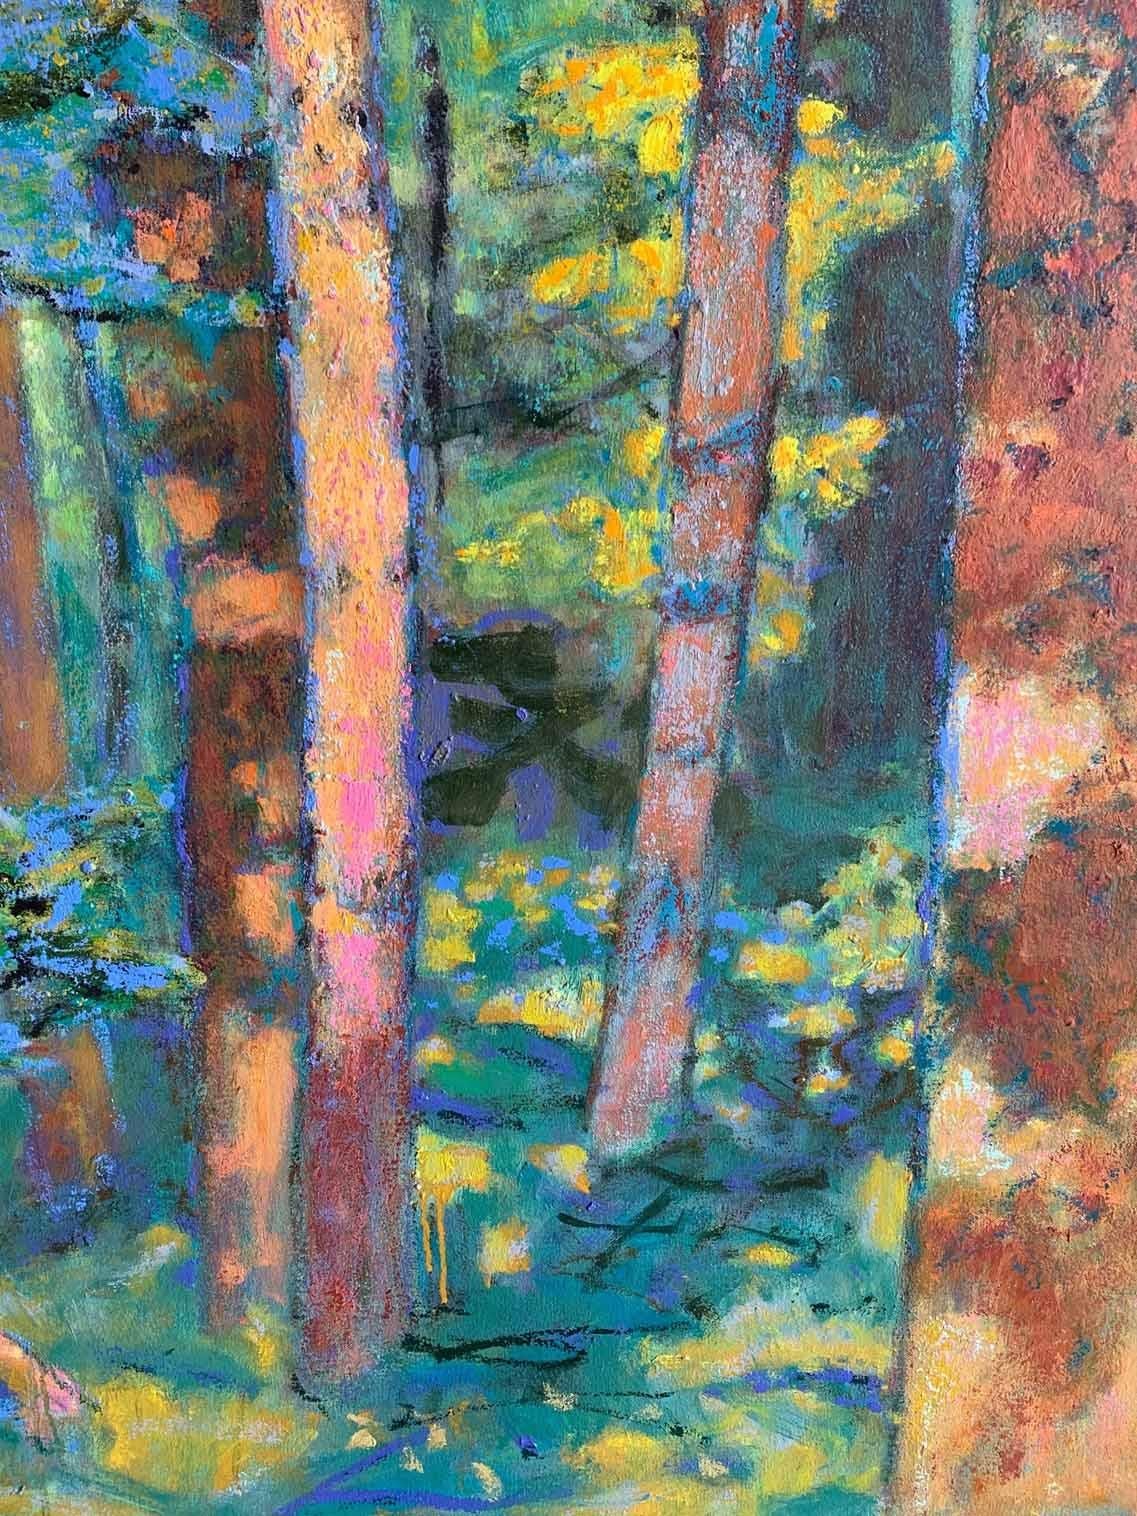 Dappled Light, Pine Forest - Painting by Rick Stevens